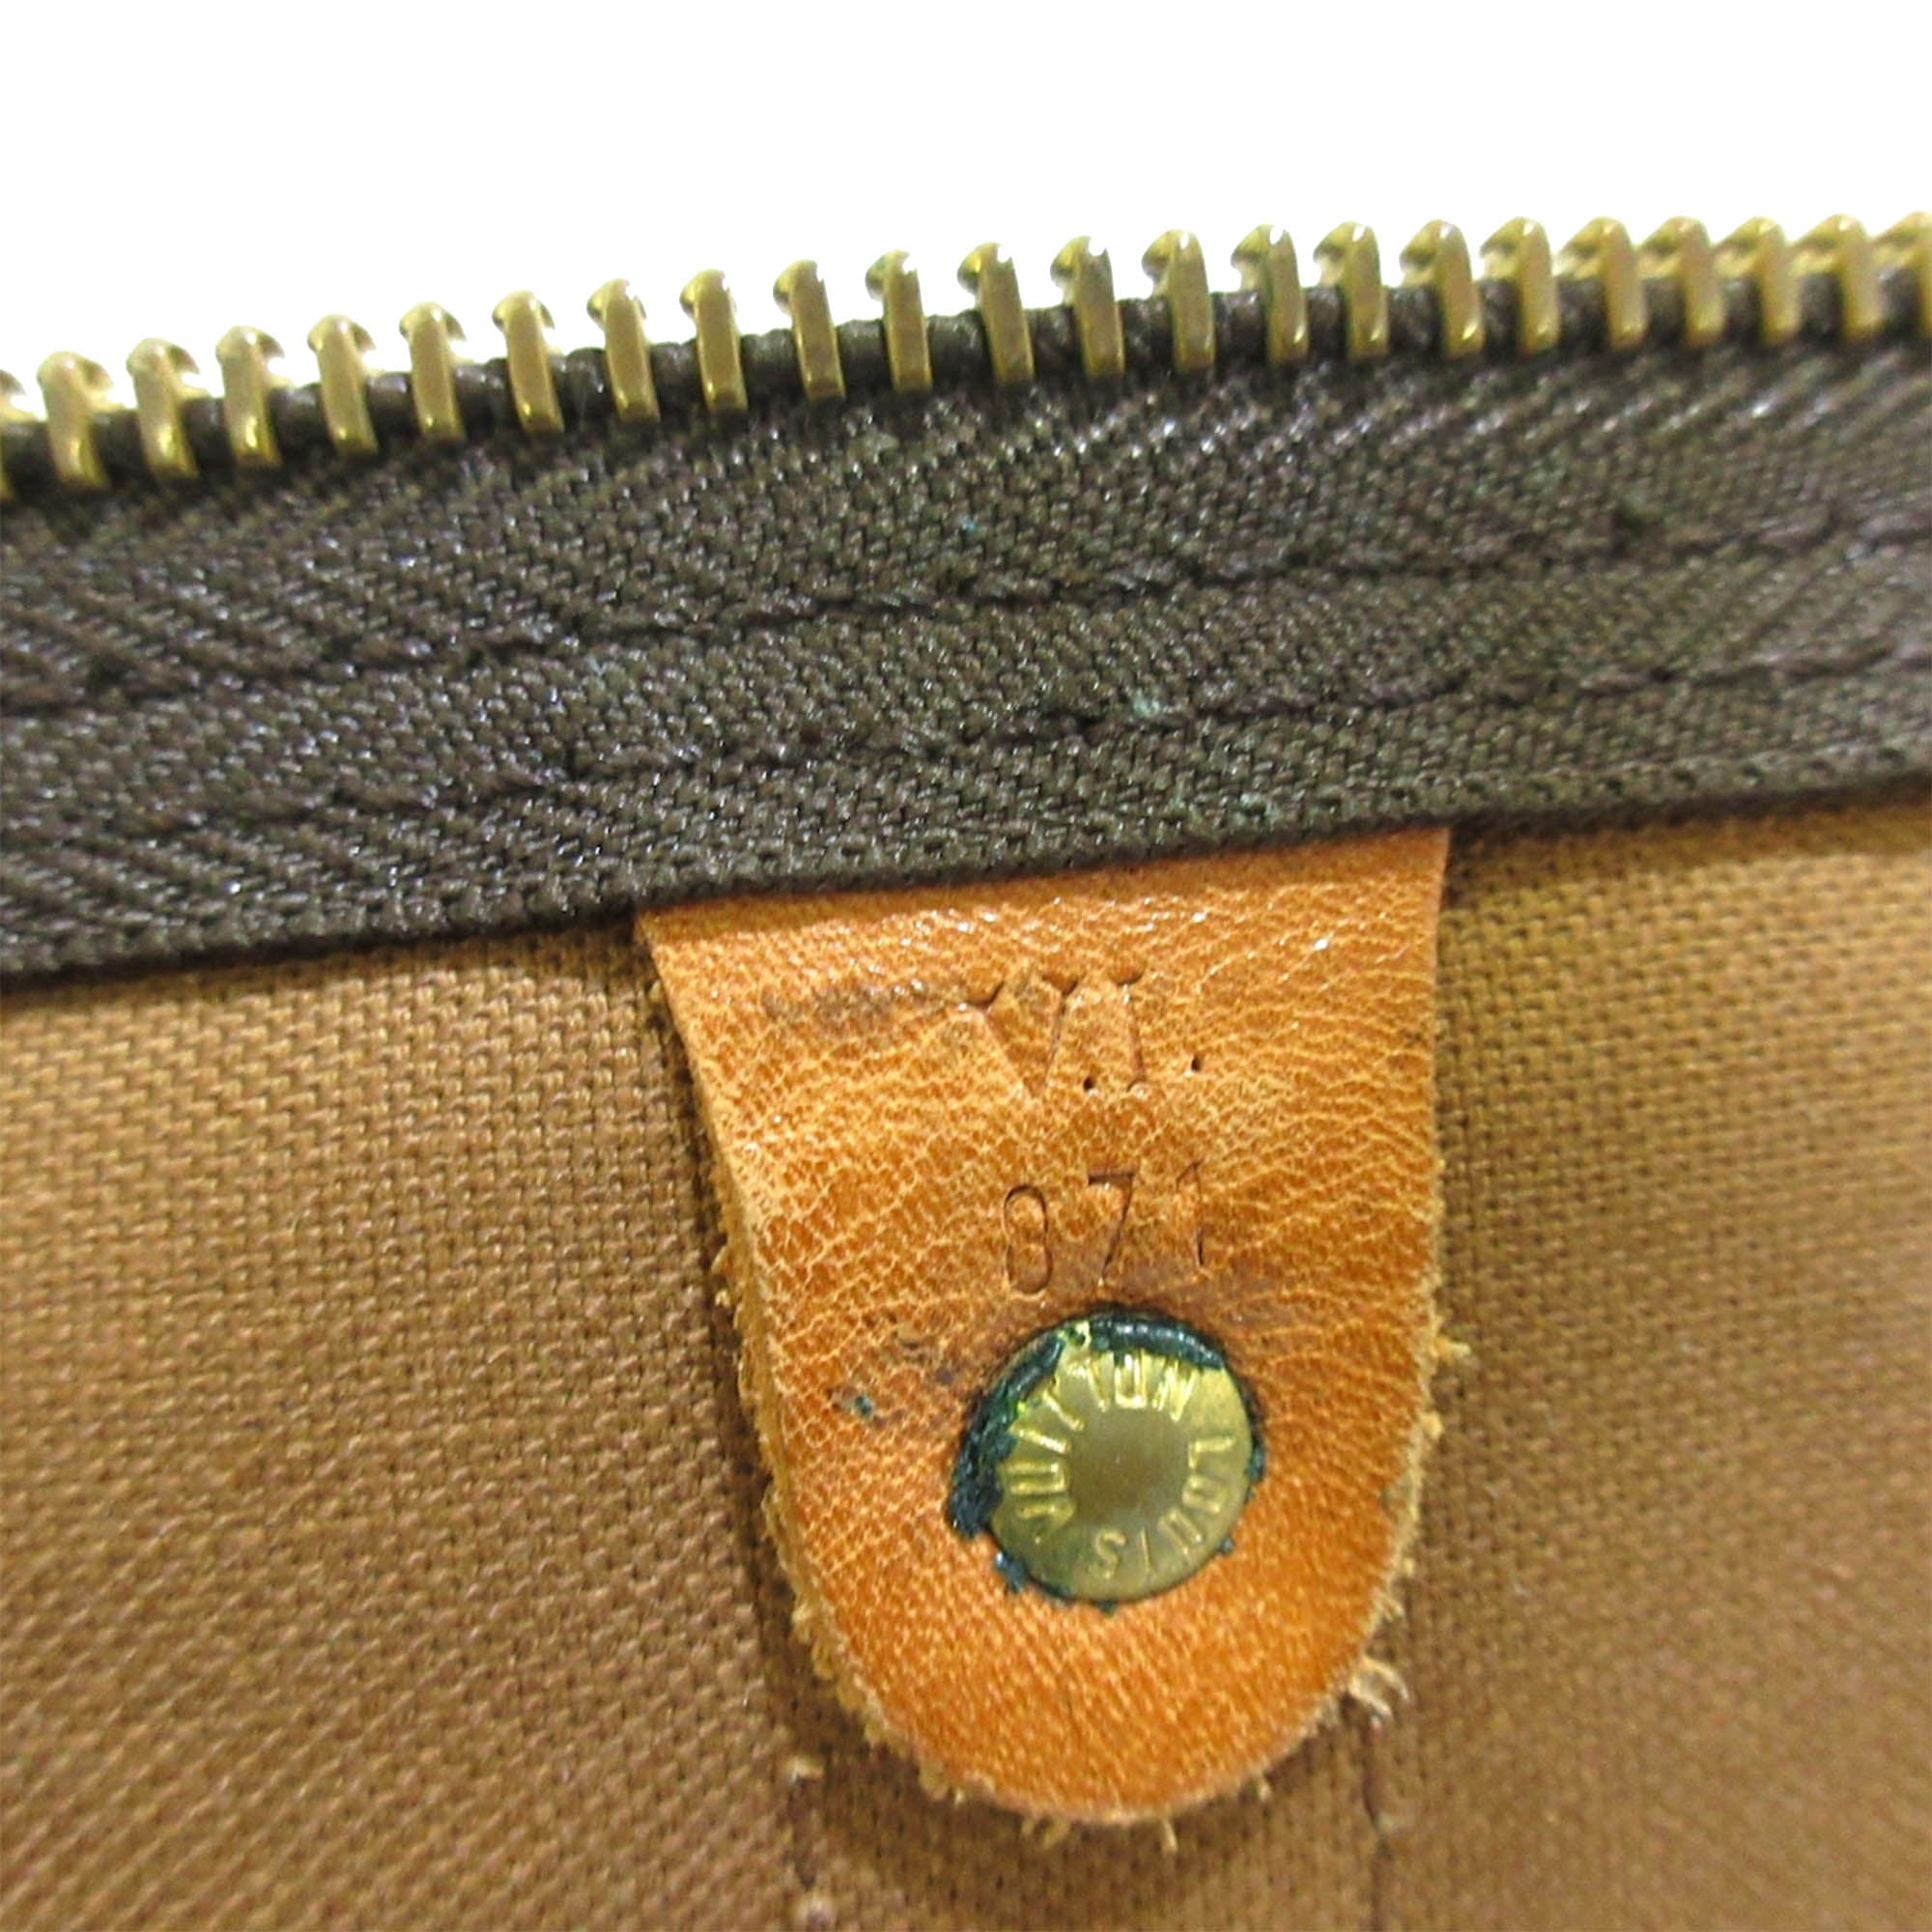 Vintage Louis Vuitton Keepall 45 Monogram Duffle VI871 050123